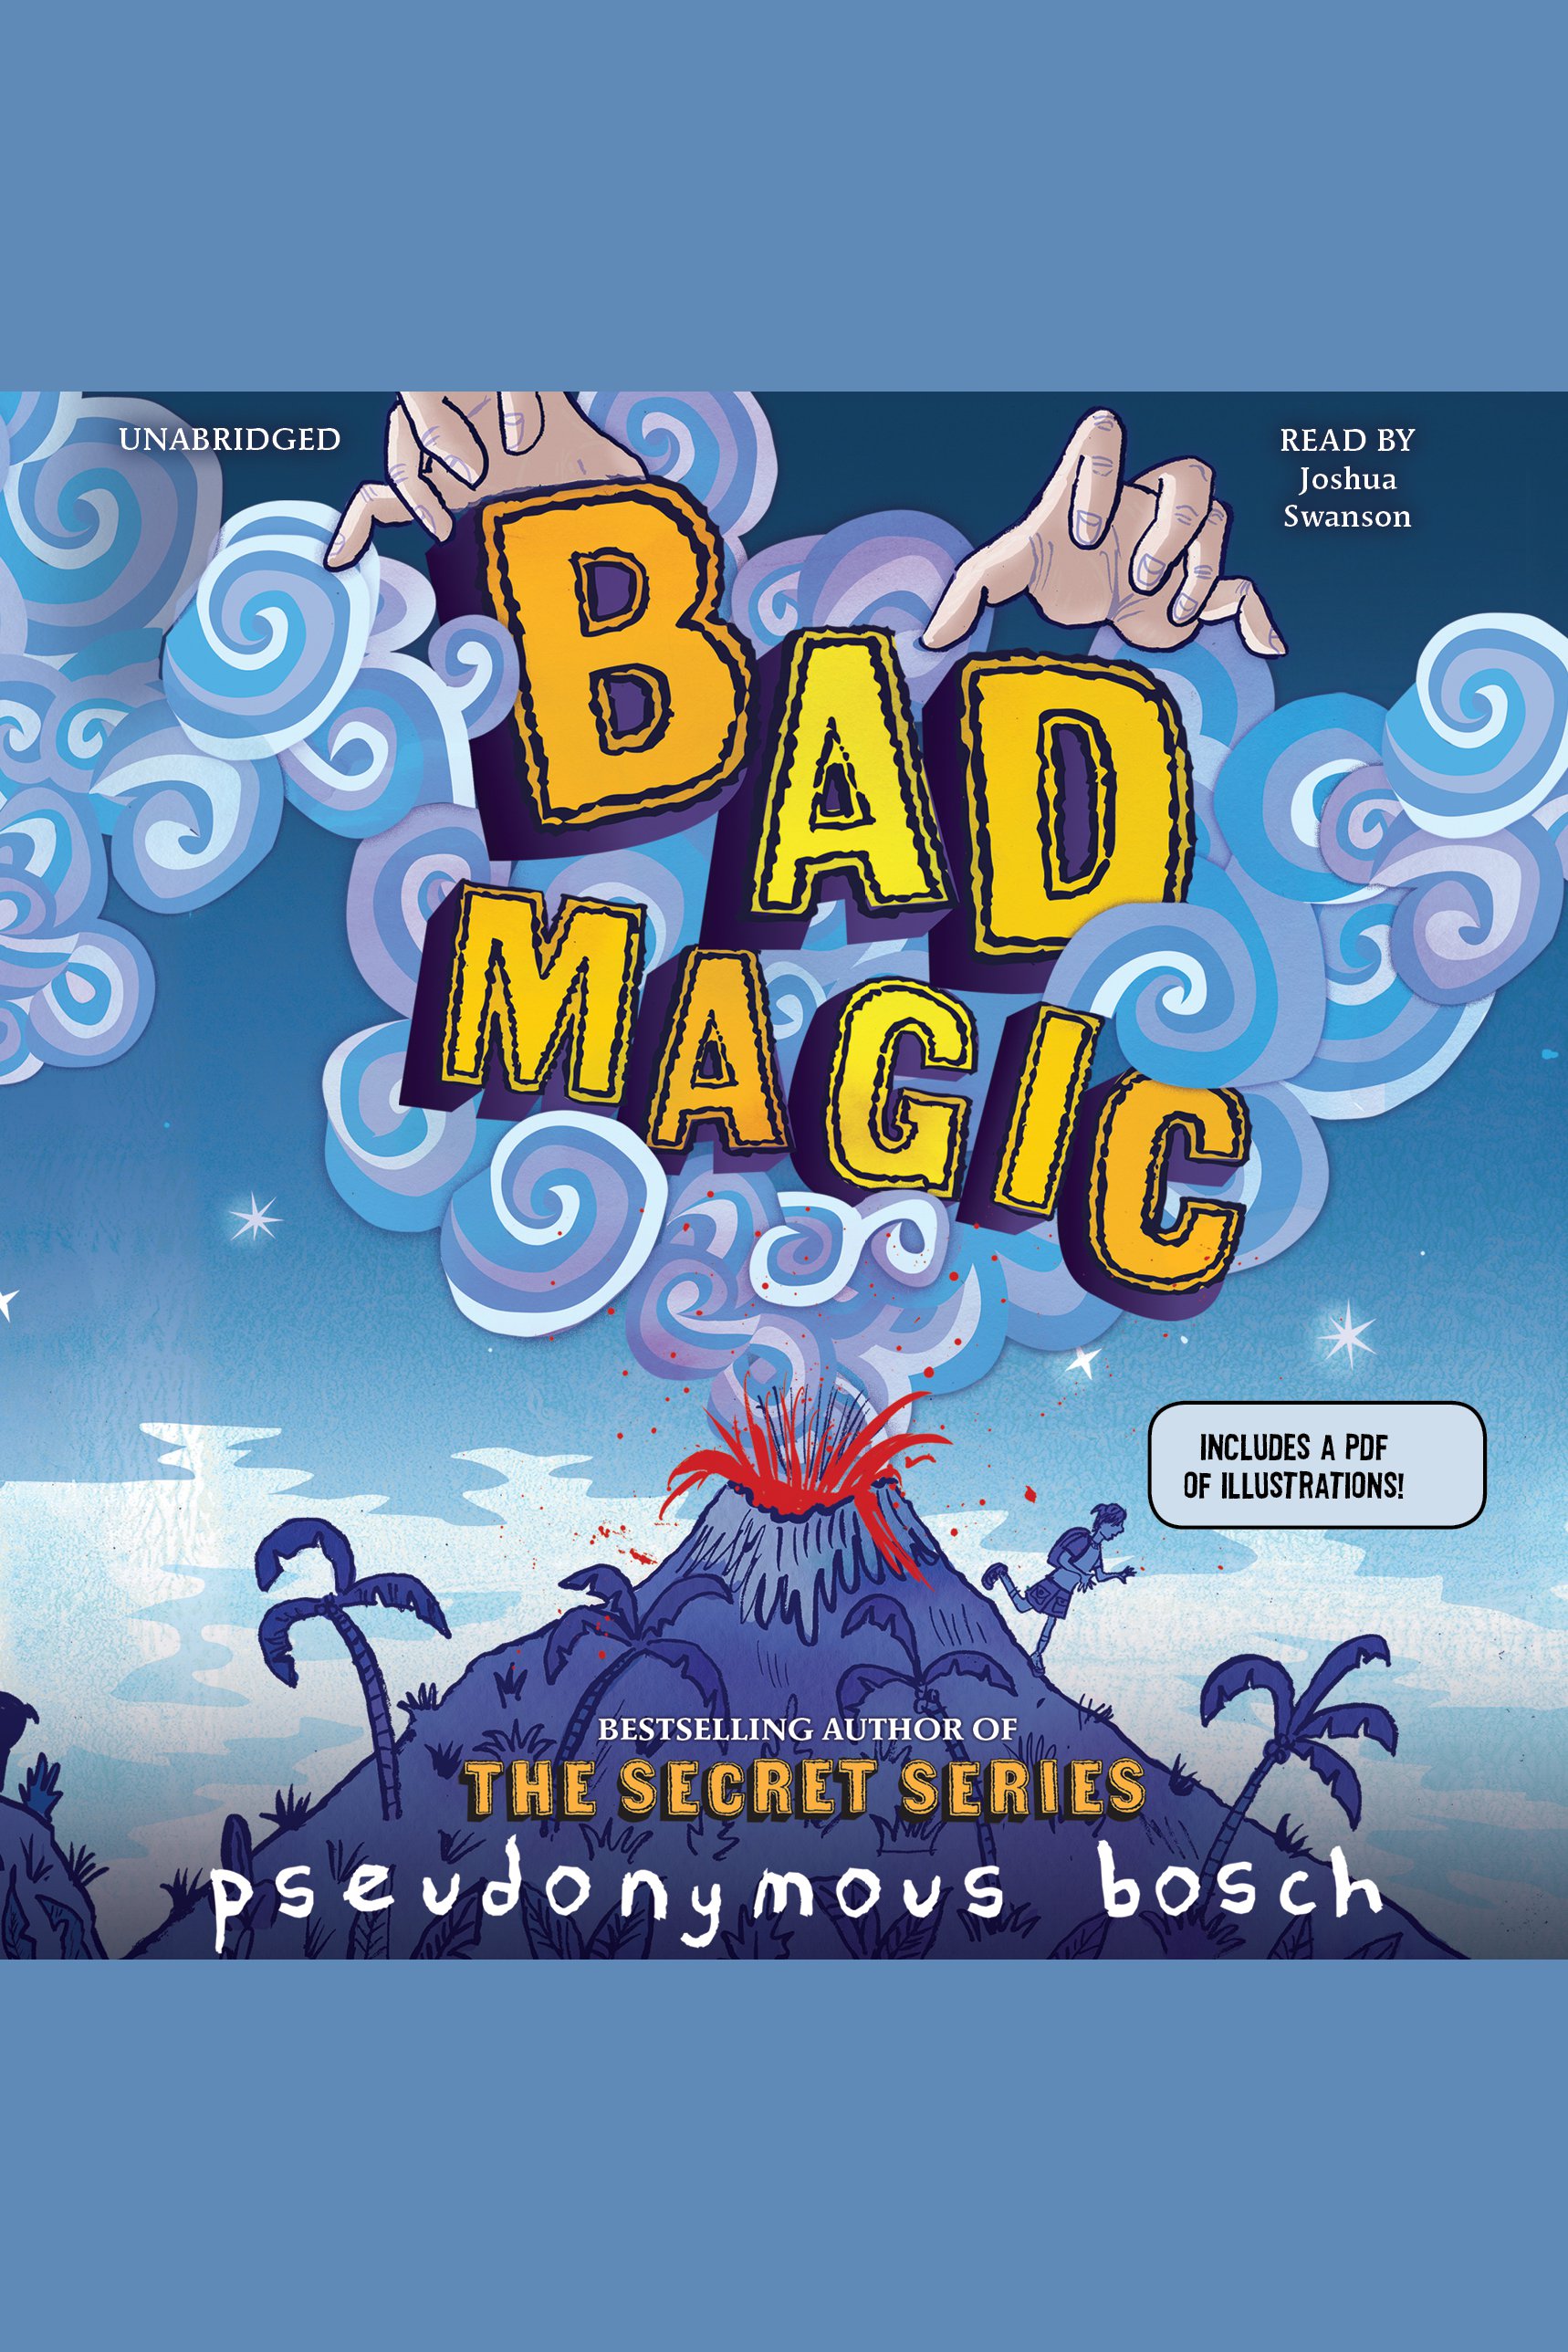 Bad magic cover image